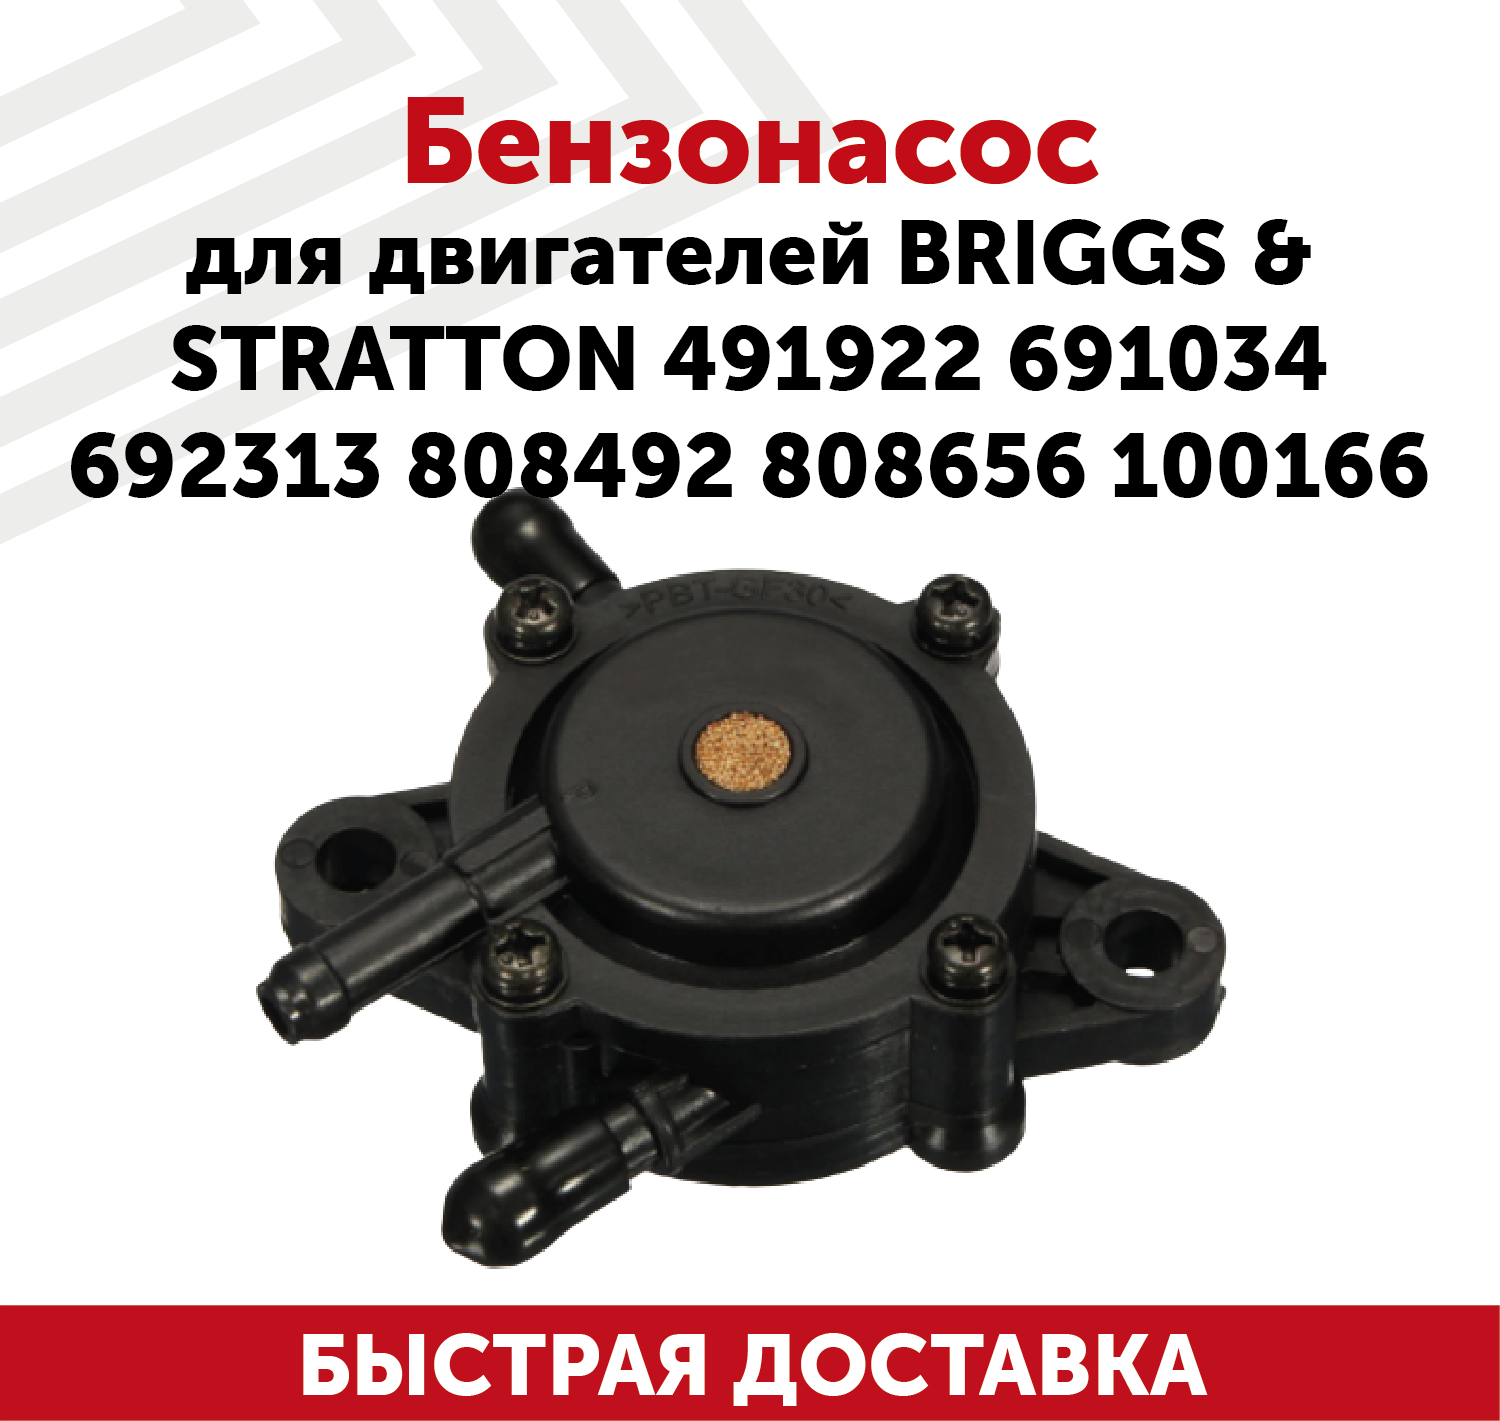 Бензонасос для двигателей Briggs&Stratton 491922, 691034, 692313, 808492, 808656